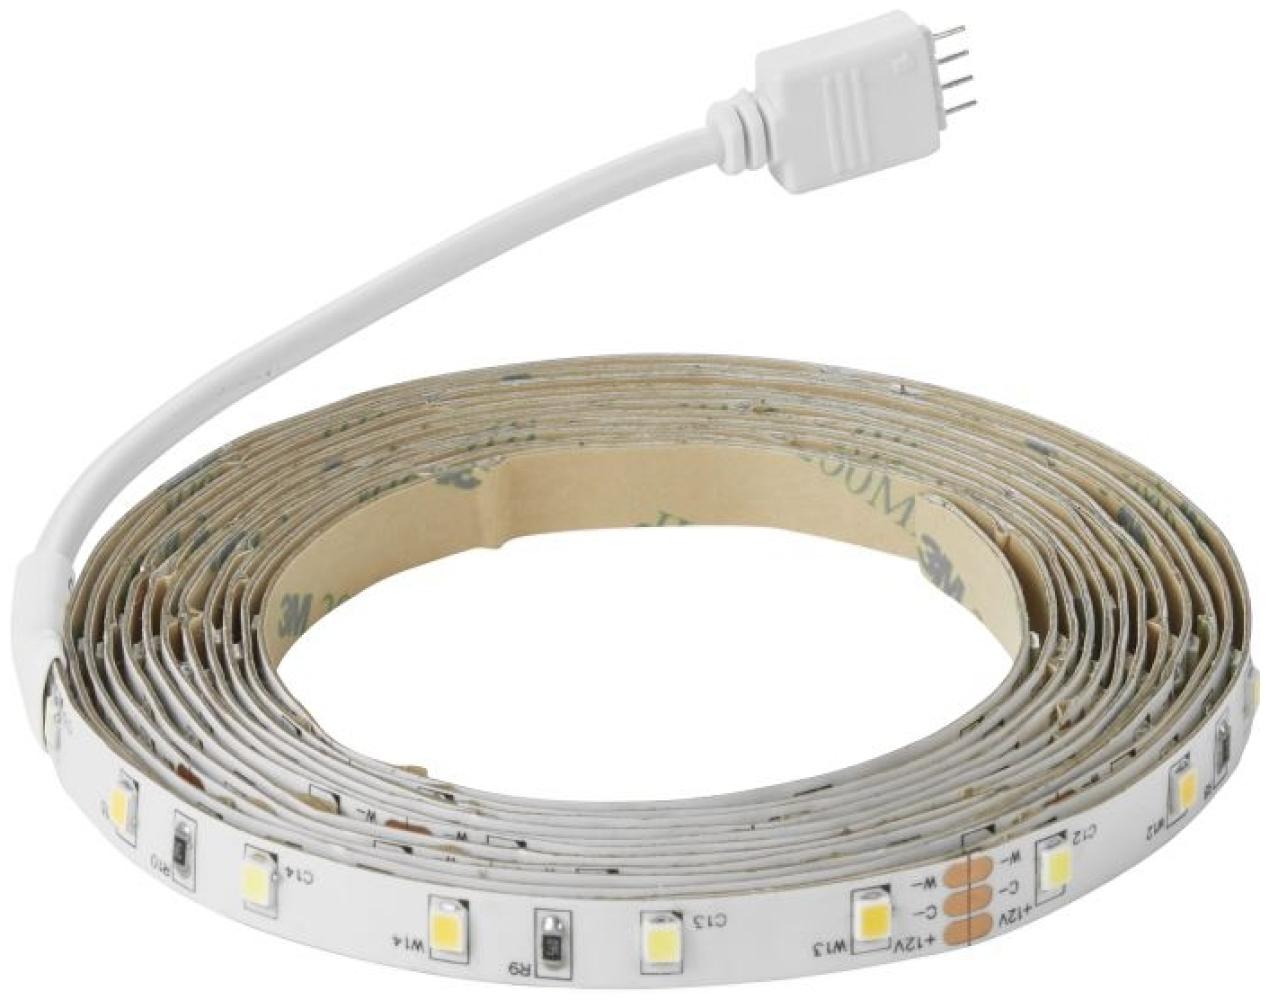 Nordlux LED Streifen 2x 5m 2700K-6000K 2450lm 80Ra IP44 0,8x0,15cm inkl. Fernbedienung u. Netzteil Bild 1